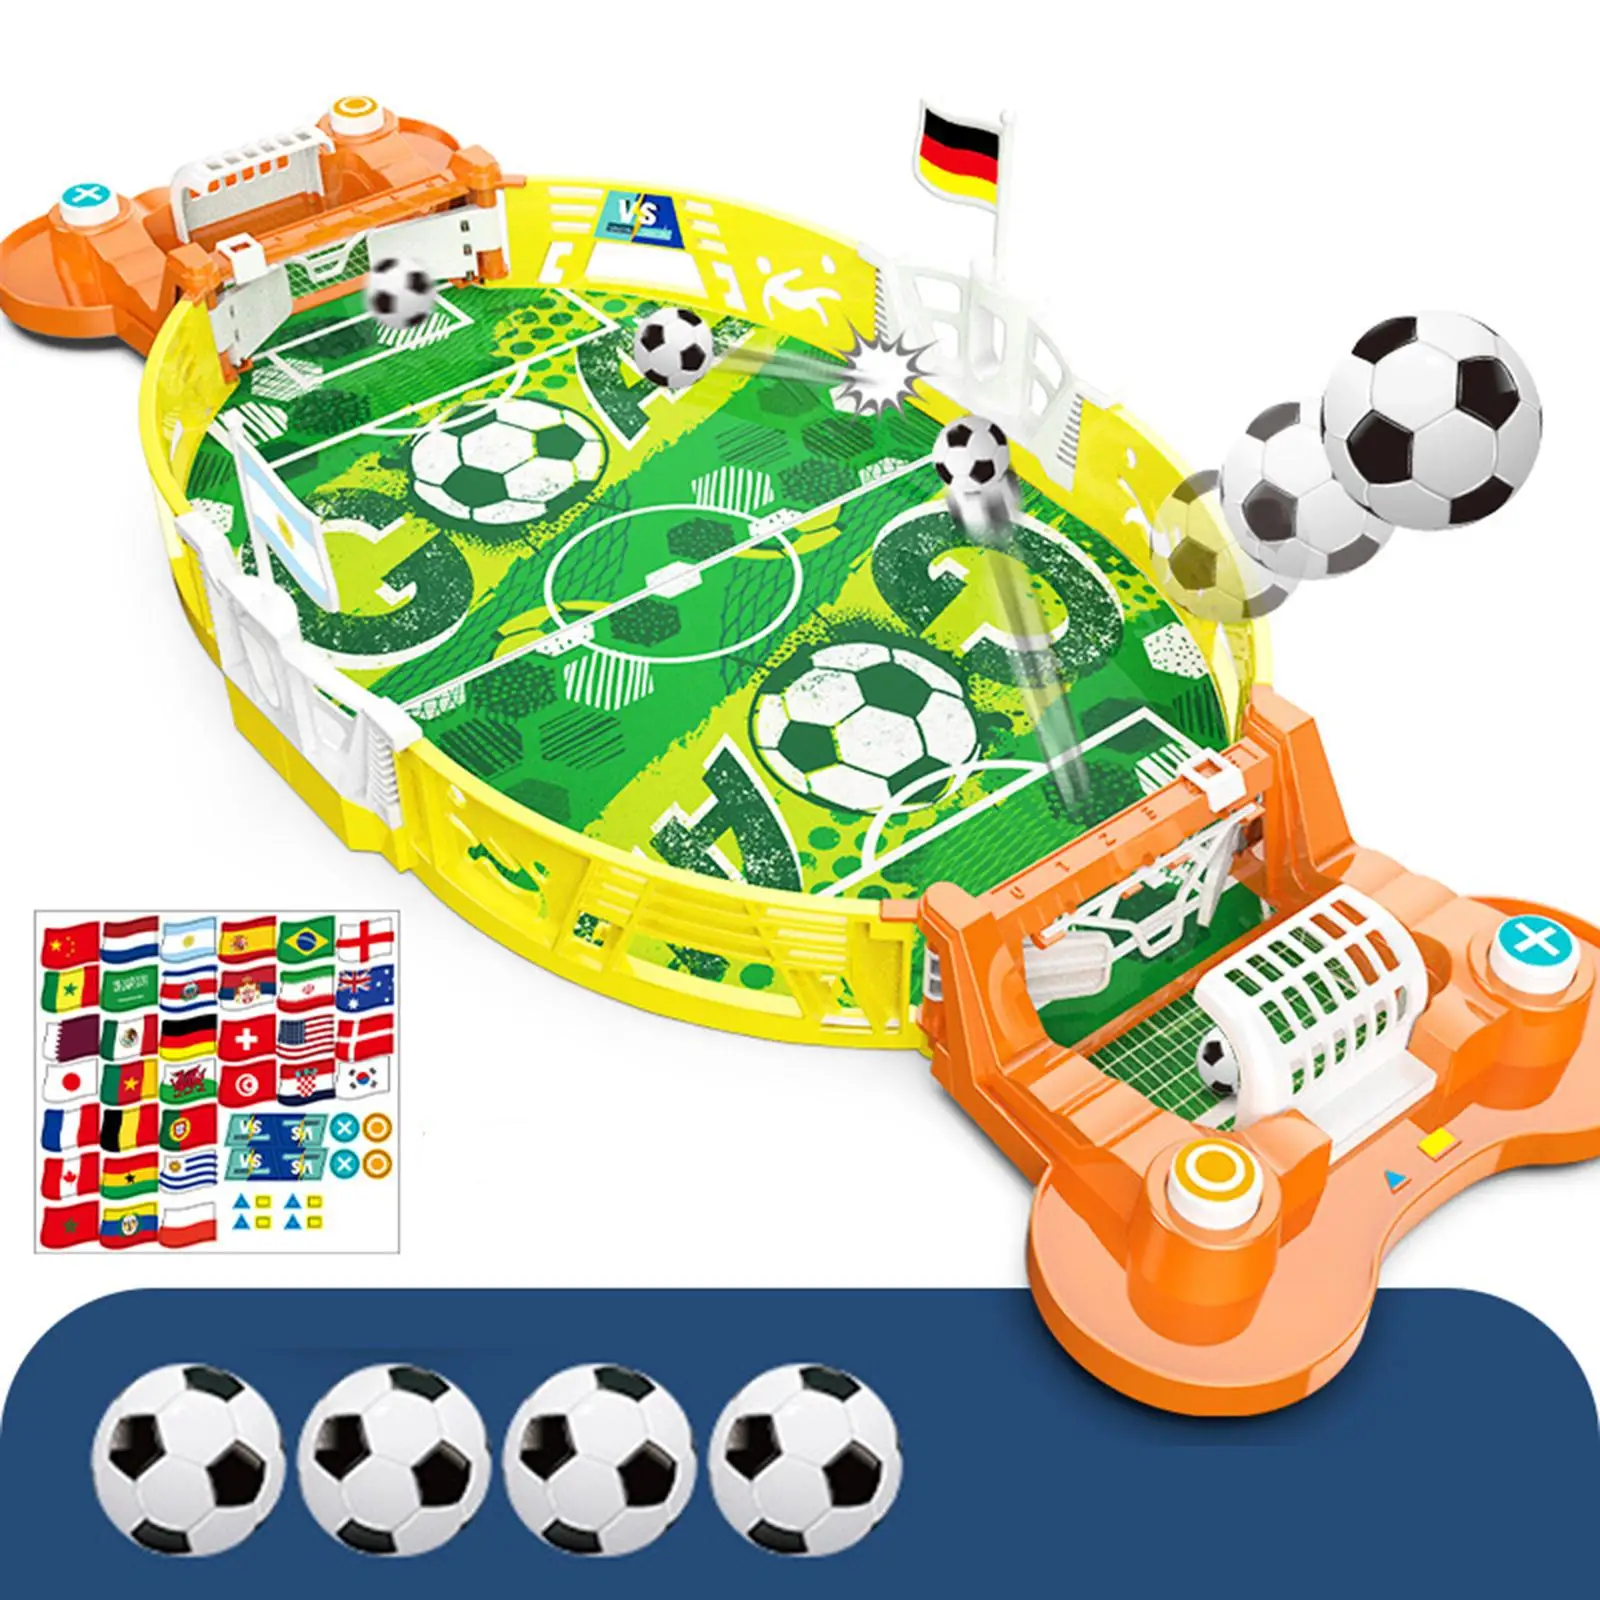 Tabletop Football Soccer Pinball Game Portable Desktop Sport Board Game for Family Game Boys Girls Children Entertainment Party